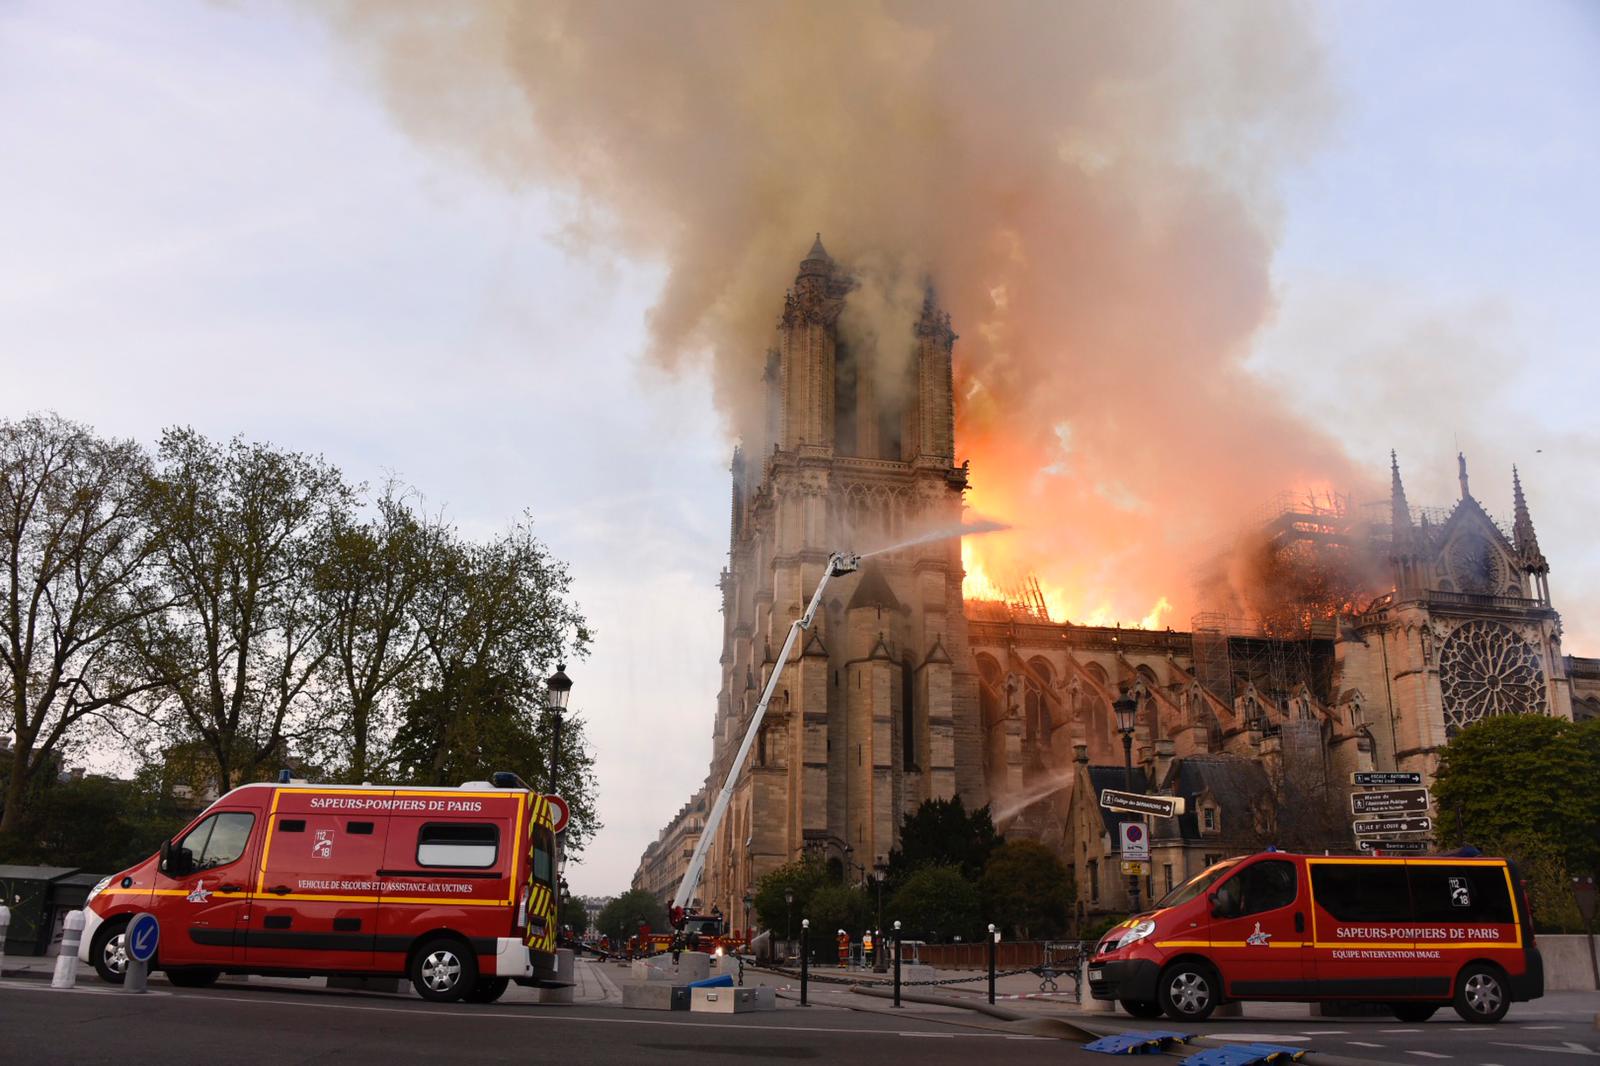 Paris, Notre-Dame burns: huge fire envelops cathedral, spire collapses. Live video